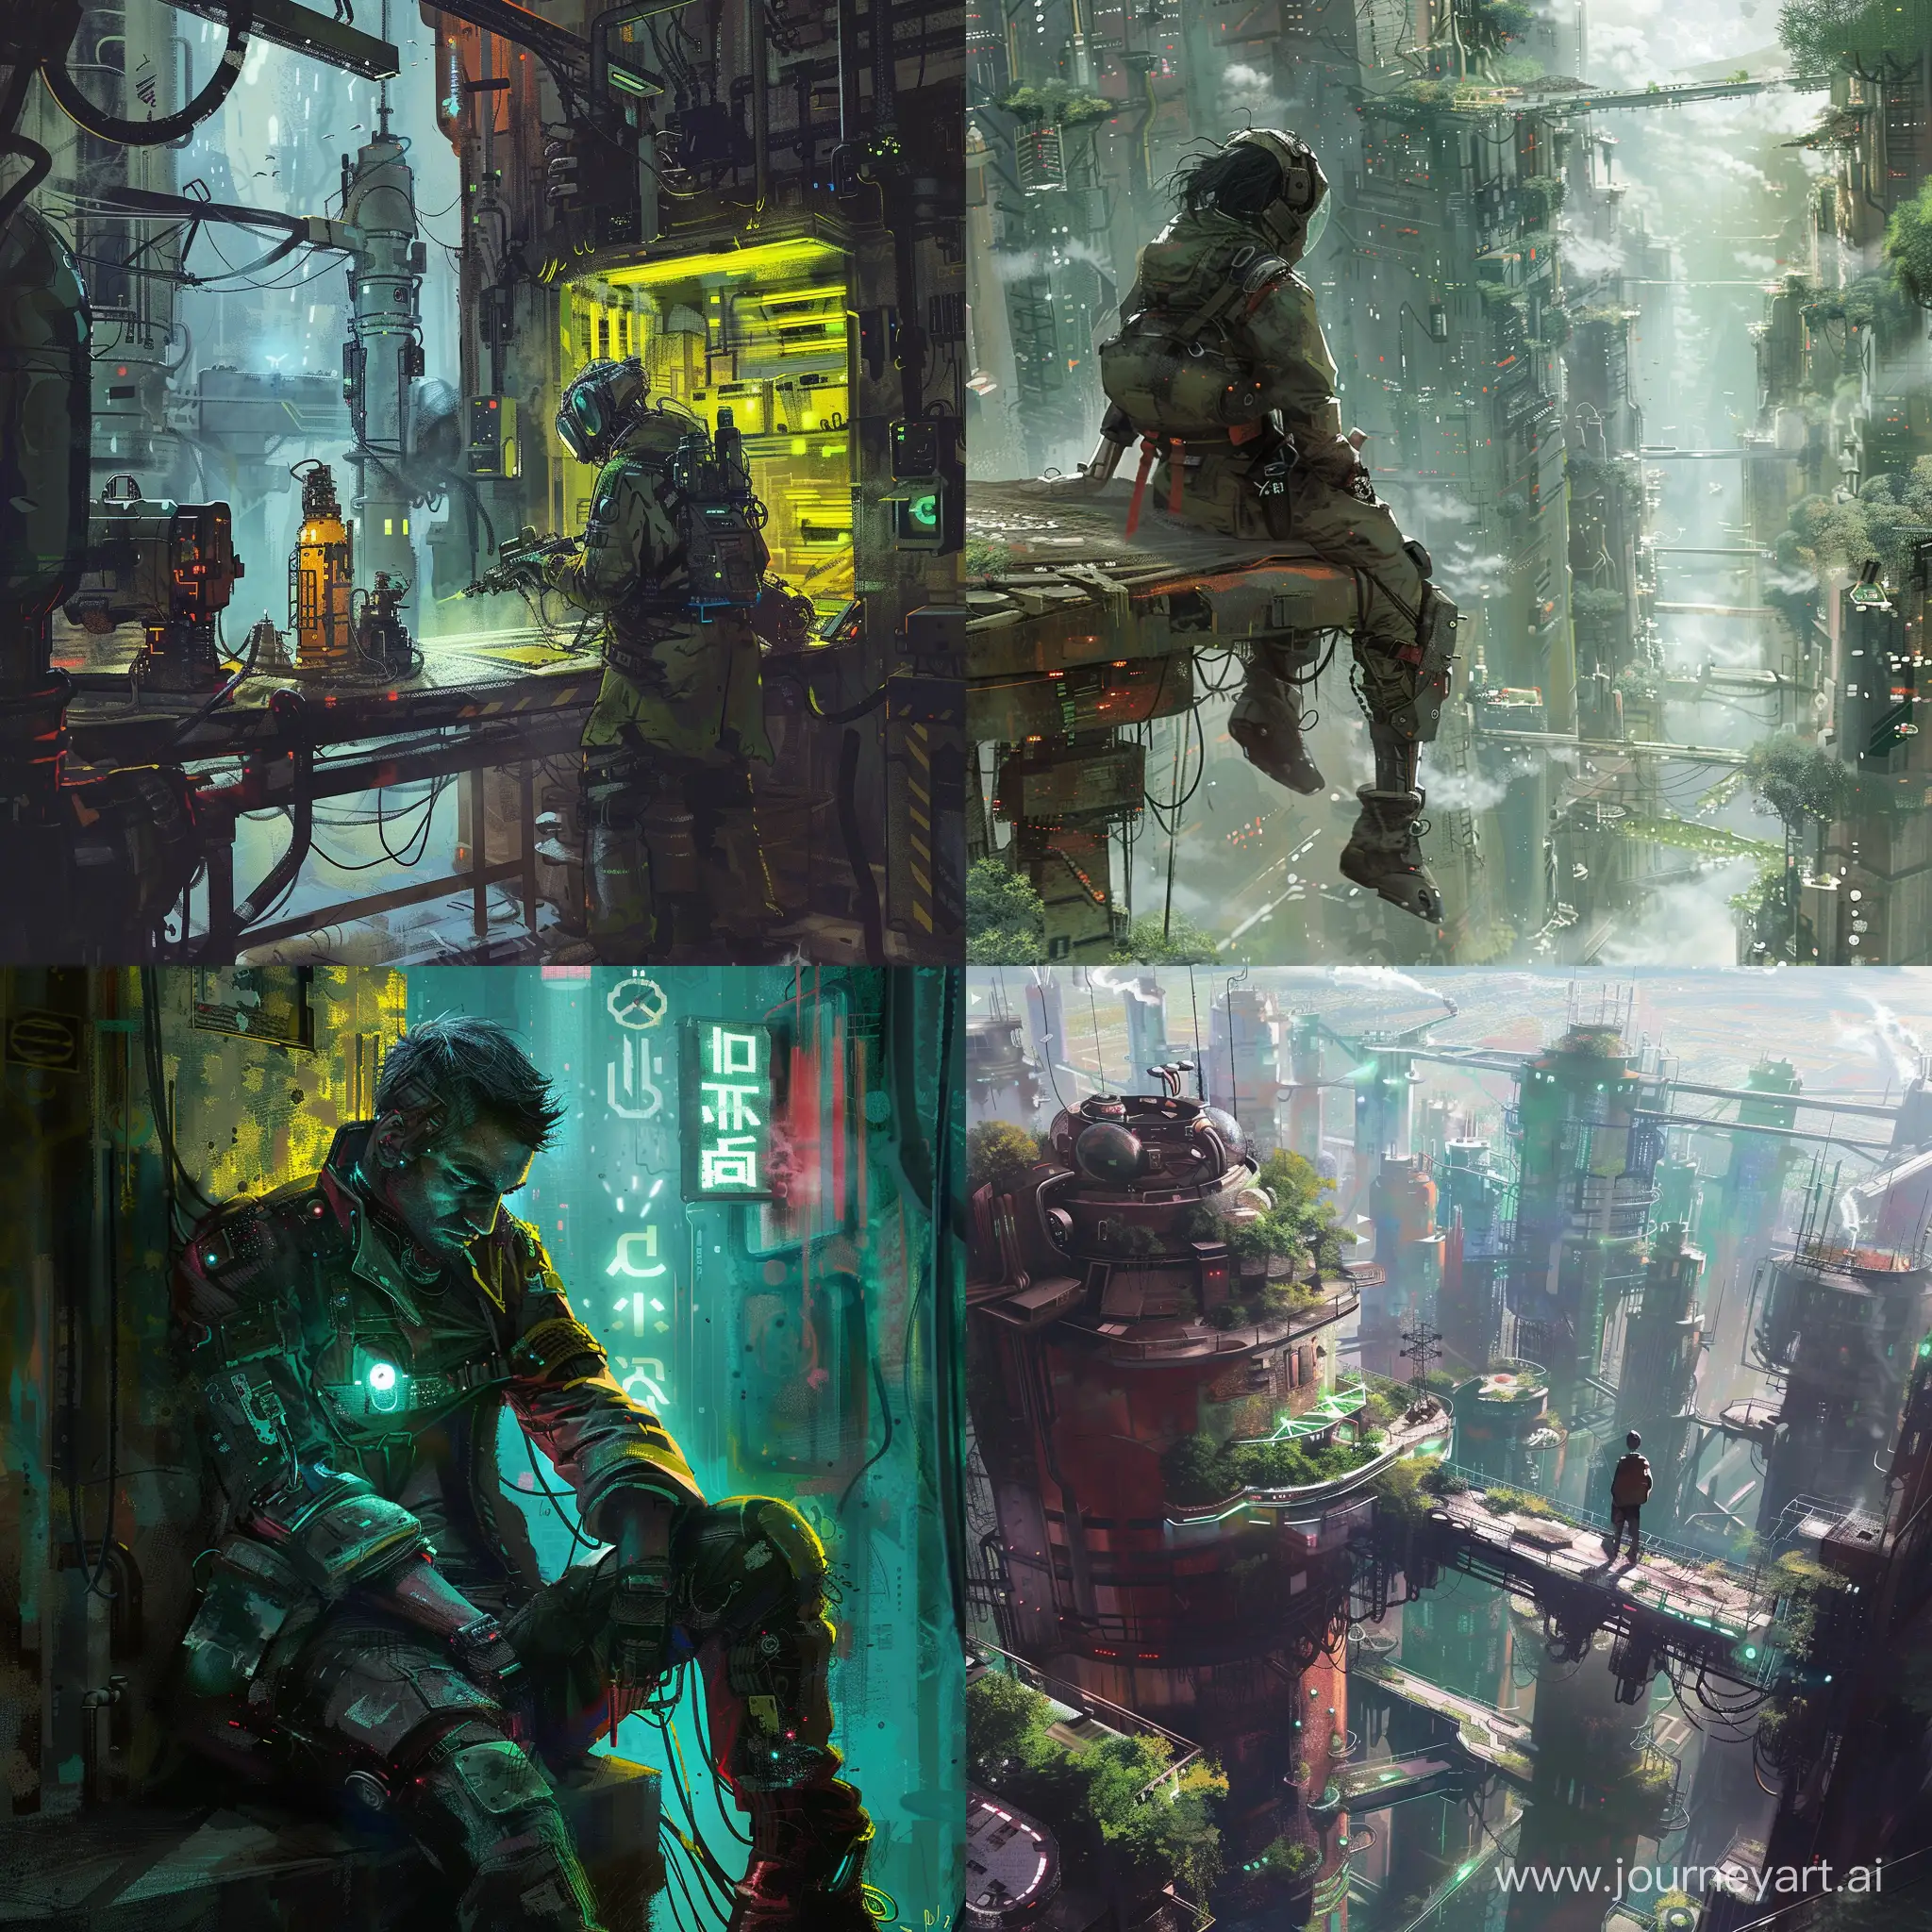 Futuristic-Biopunk-Cityscape-Art-Link-in-Cybernetic-Setting